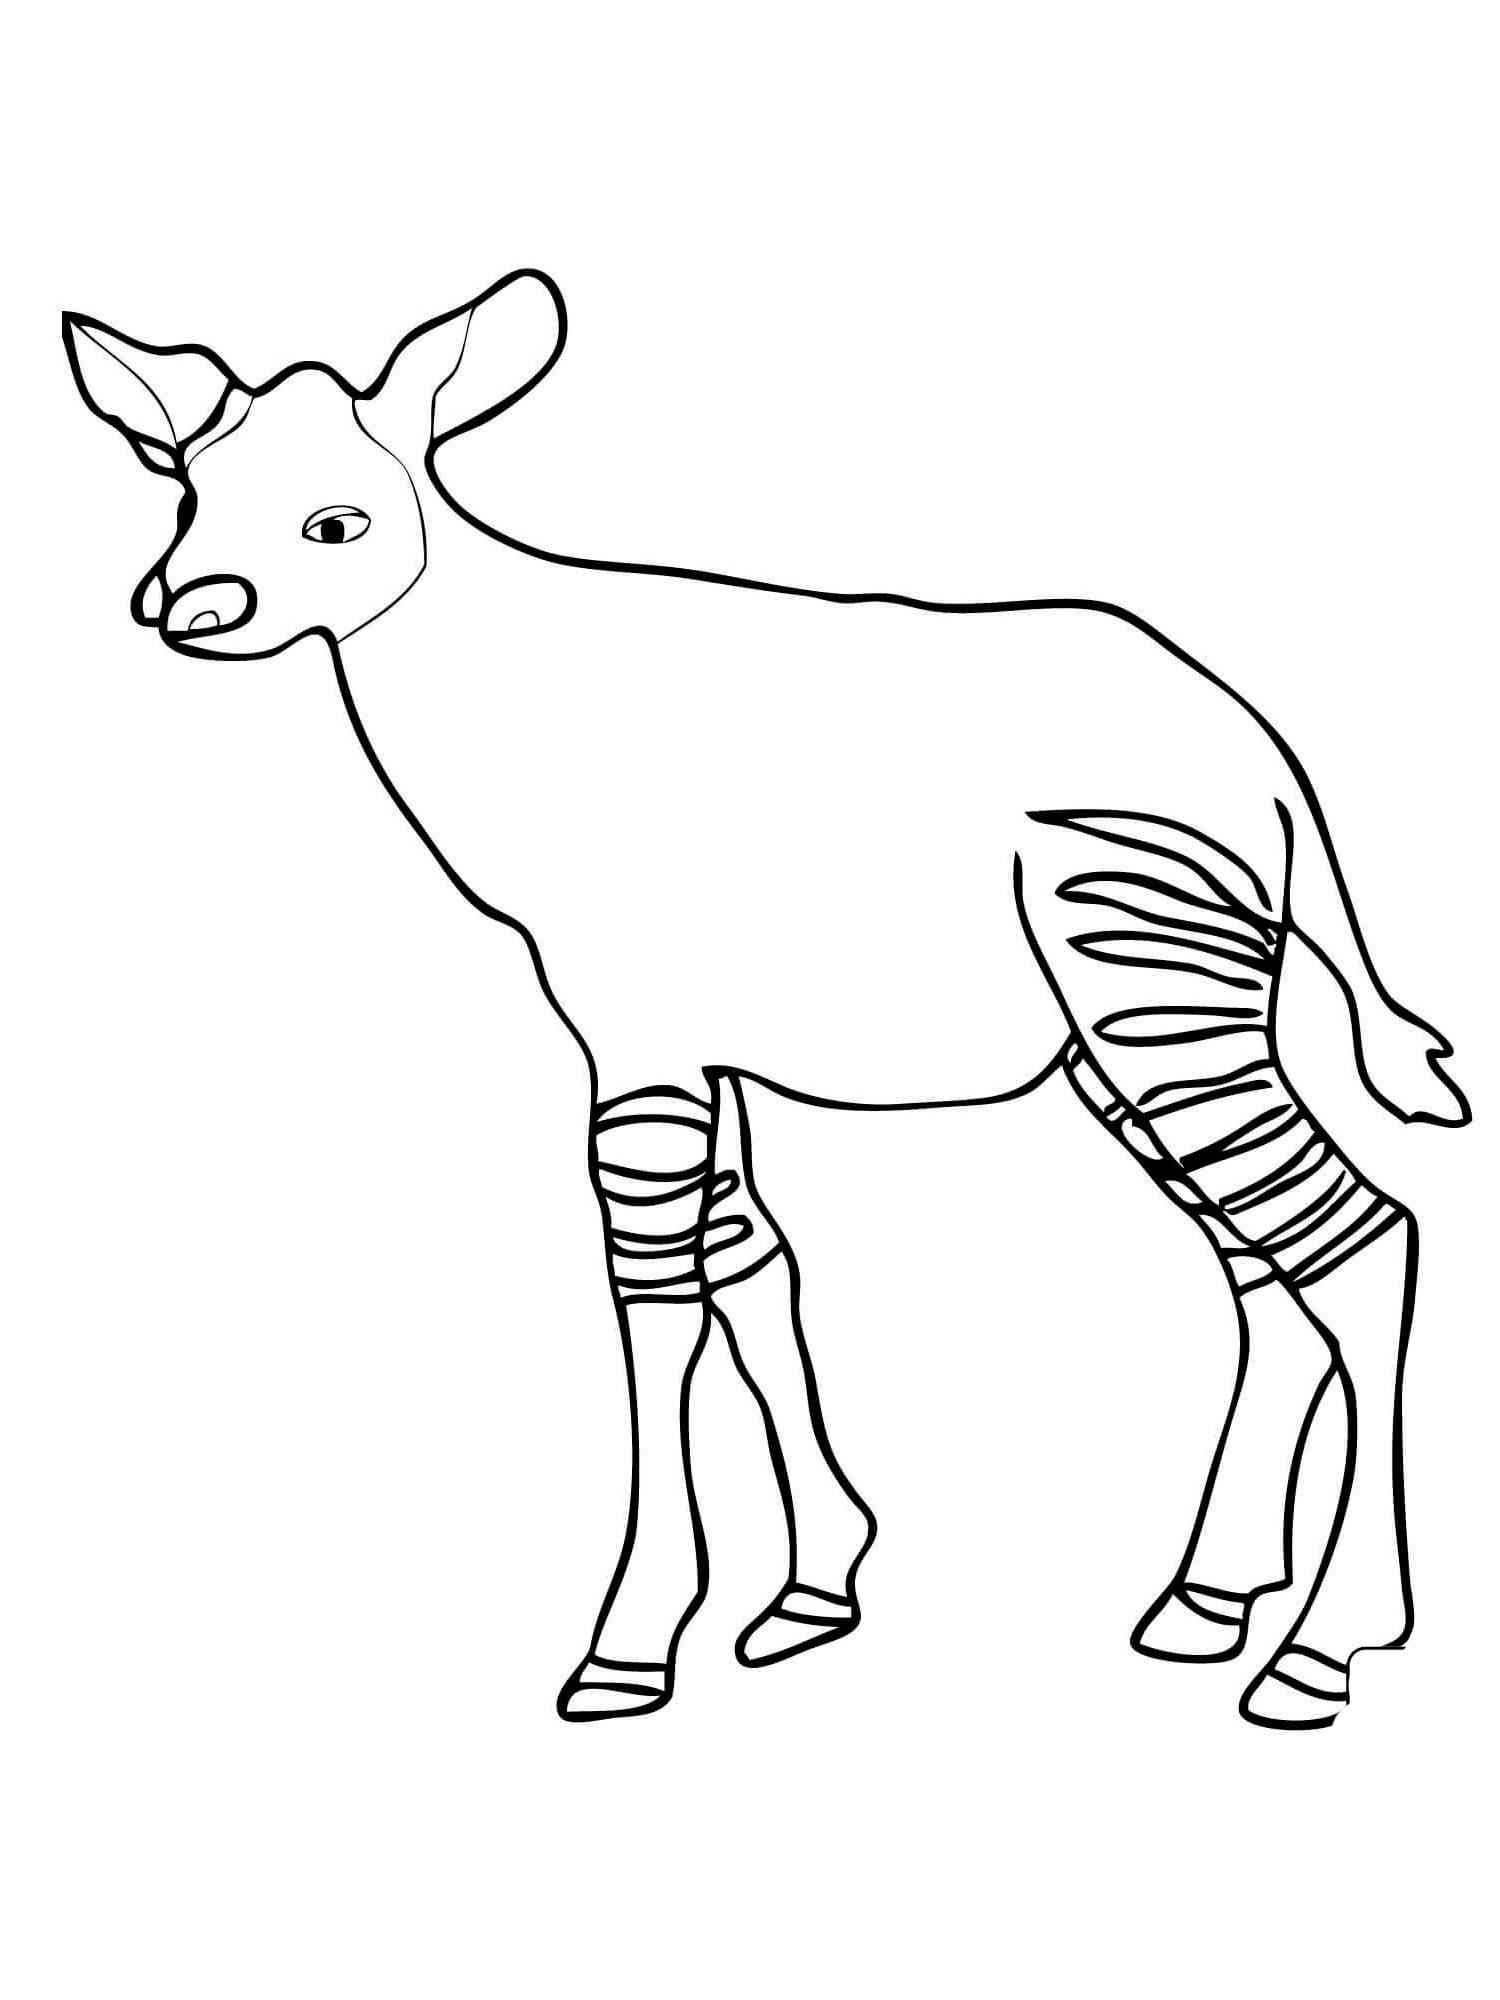 Funny Okapi coloring page